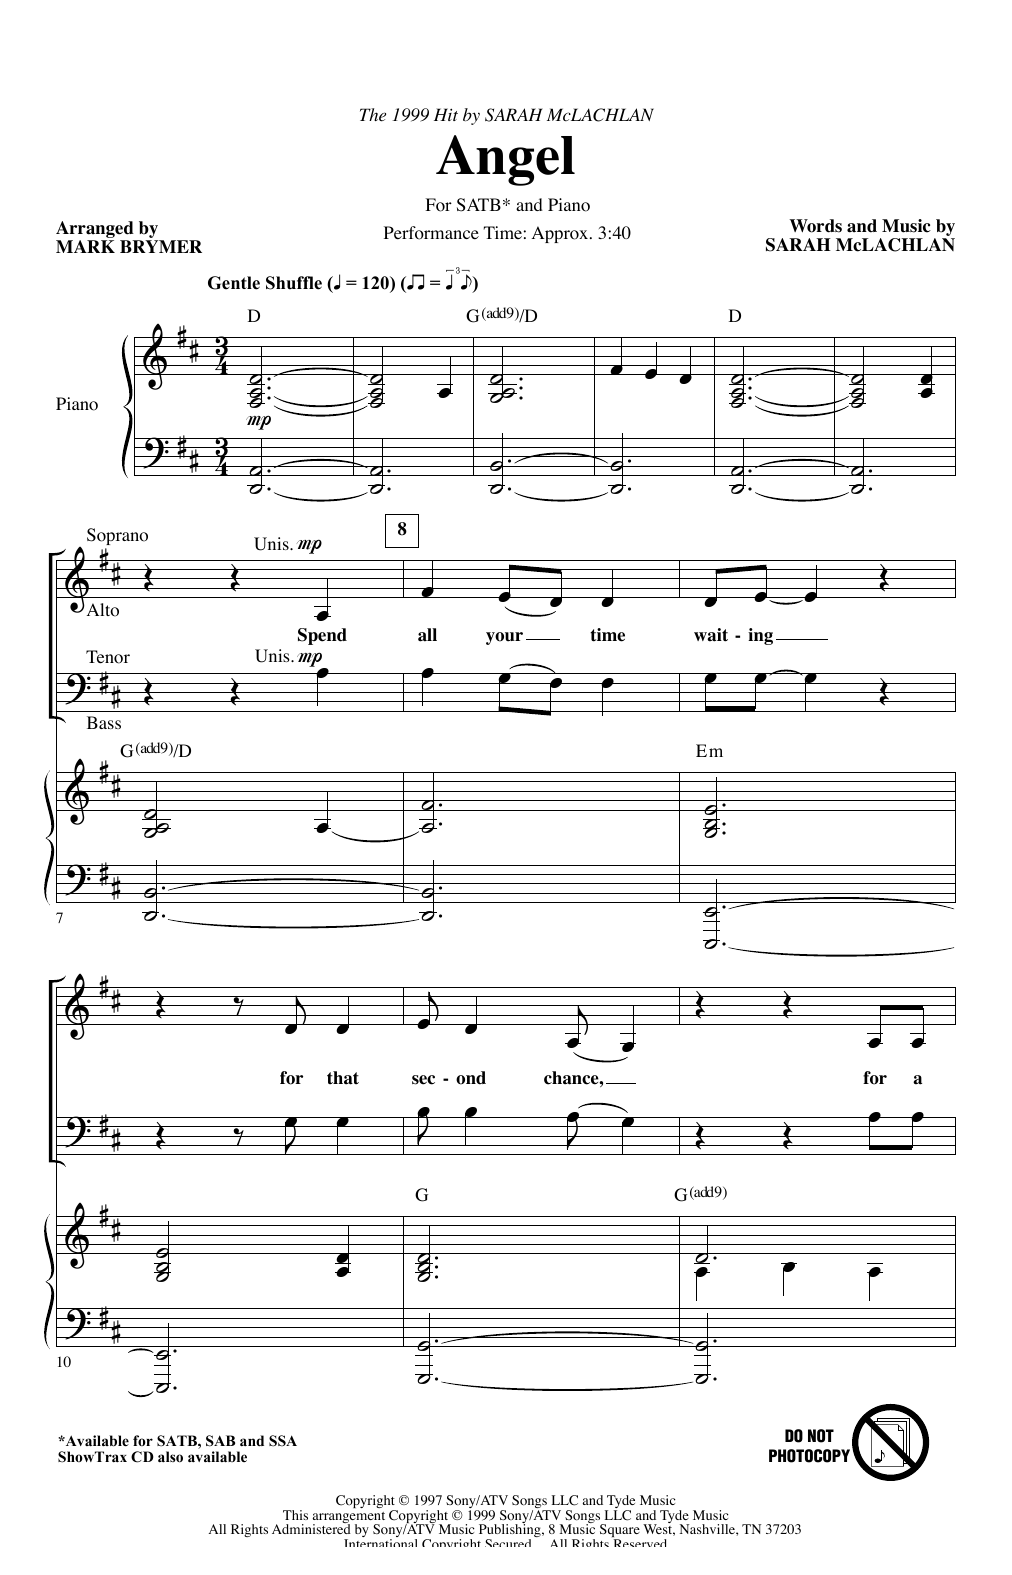 Sarah McLachlan Angel (arr. Mark Brymer) Sheet Music Notes & Chords for SATB Choir - Download or Print PDF